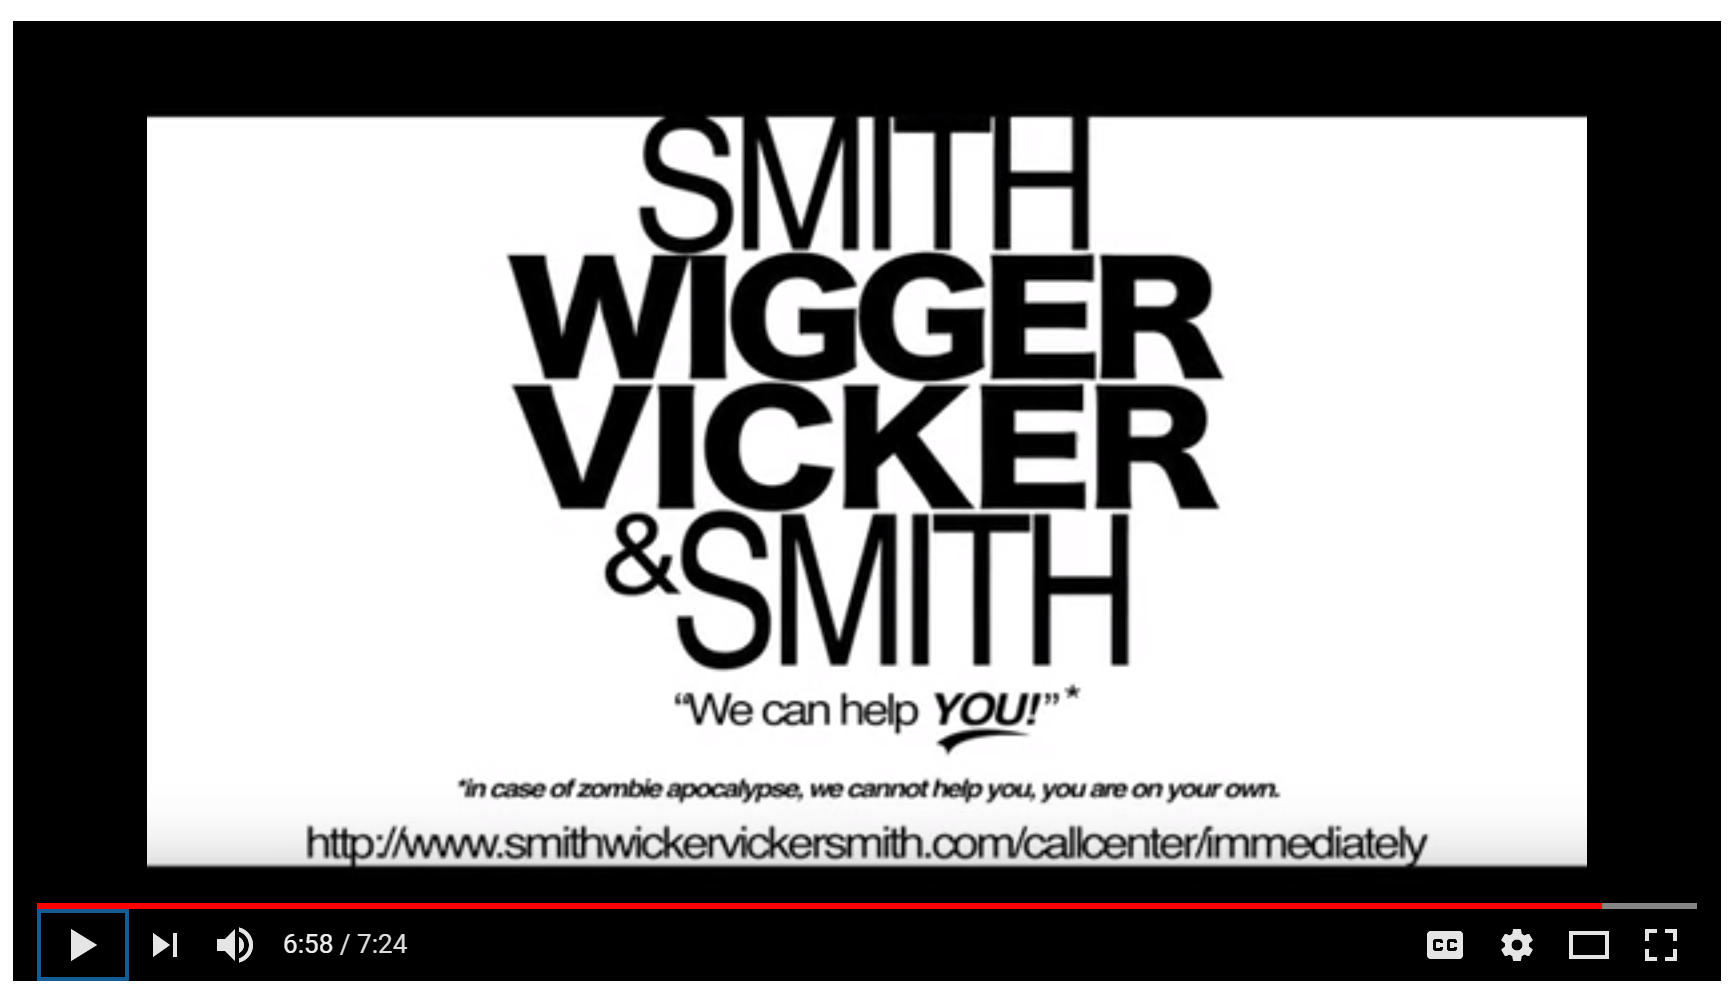 "Smith, Wigger, Vicker & Smith"